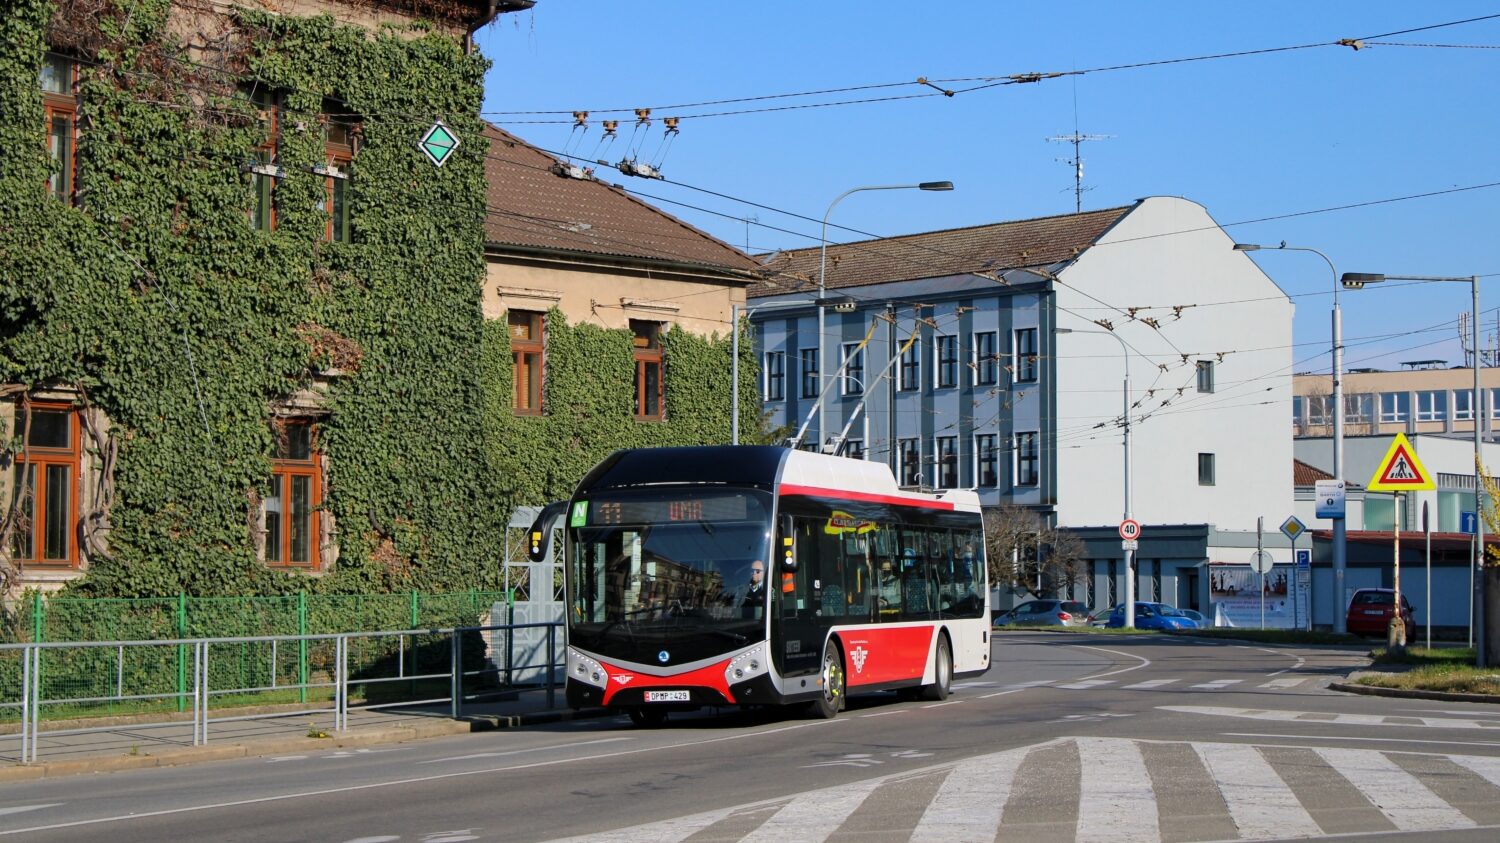 Poslední dodávku trolejbusů do Pardubic realizovala Škoda Electric v roce 2019, kdy bylo dodáno 5 vozů Škoda 32 Tr s karoserií SOR NS. (foto: Matouš Douda)